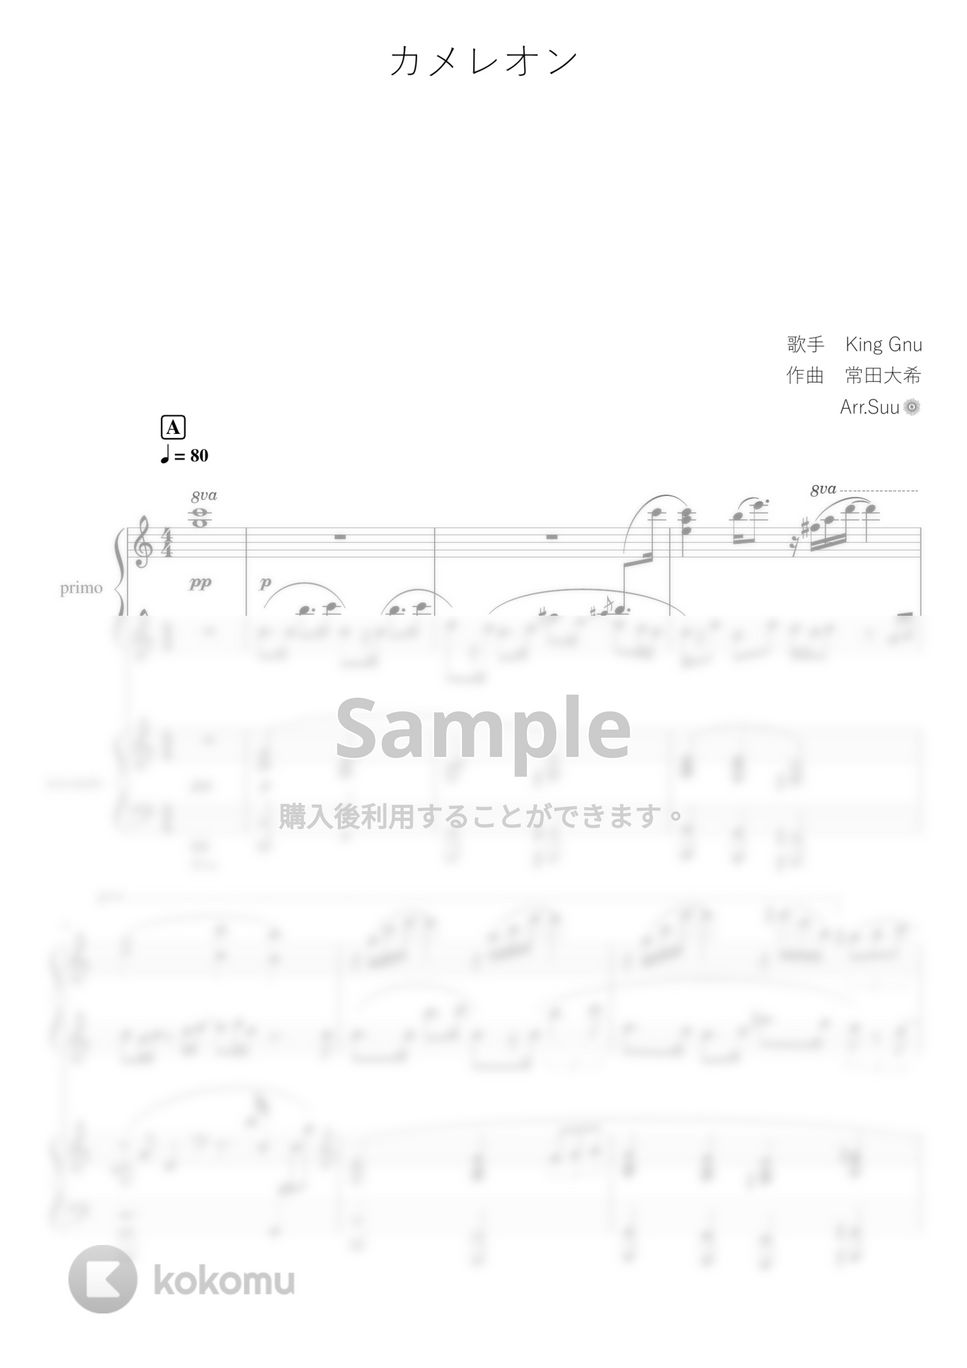 King Gnu - カメレオン (ピアノ連弾上級  / TVドラマ『ミステリと言う勿れ』主題歌) by Suu